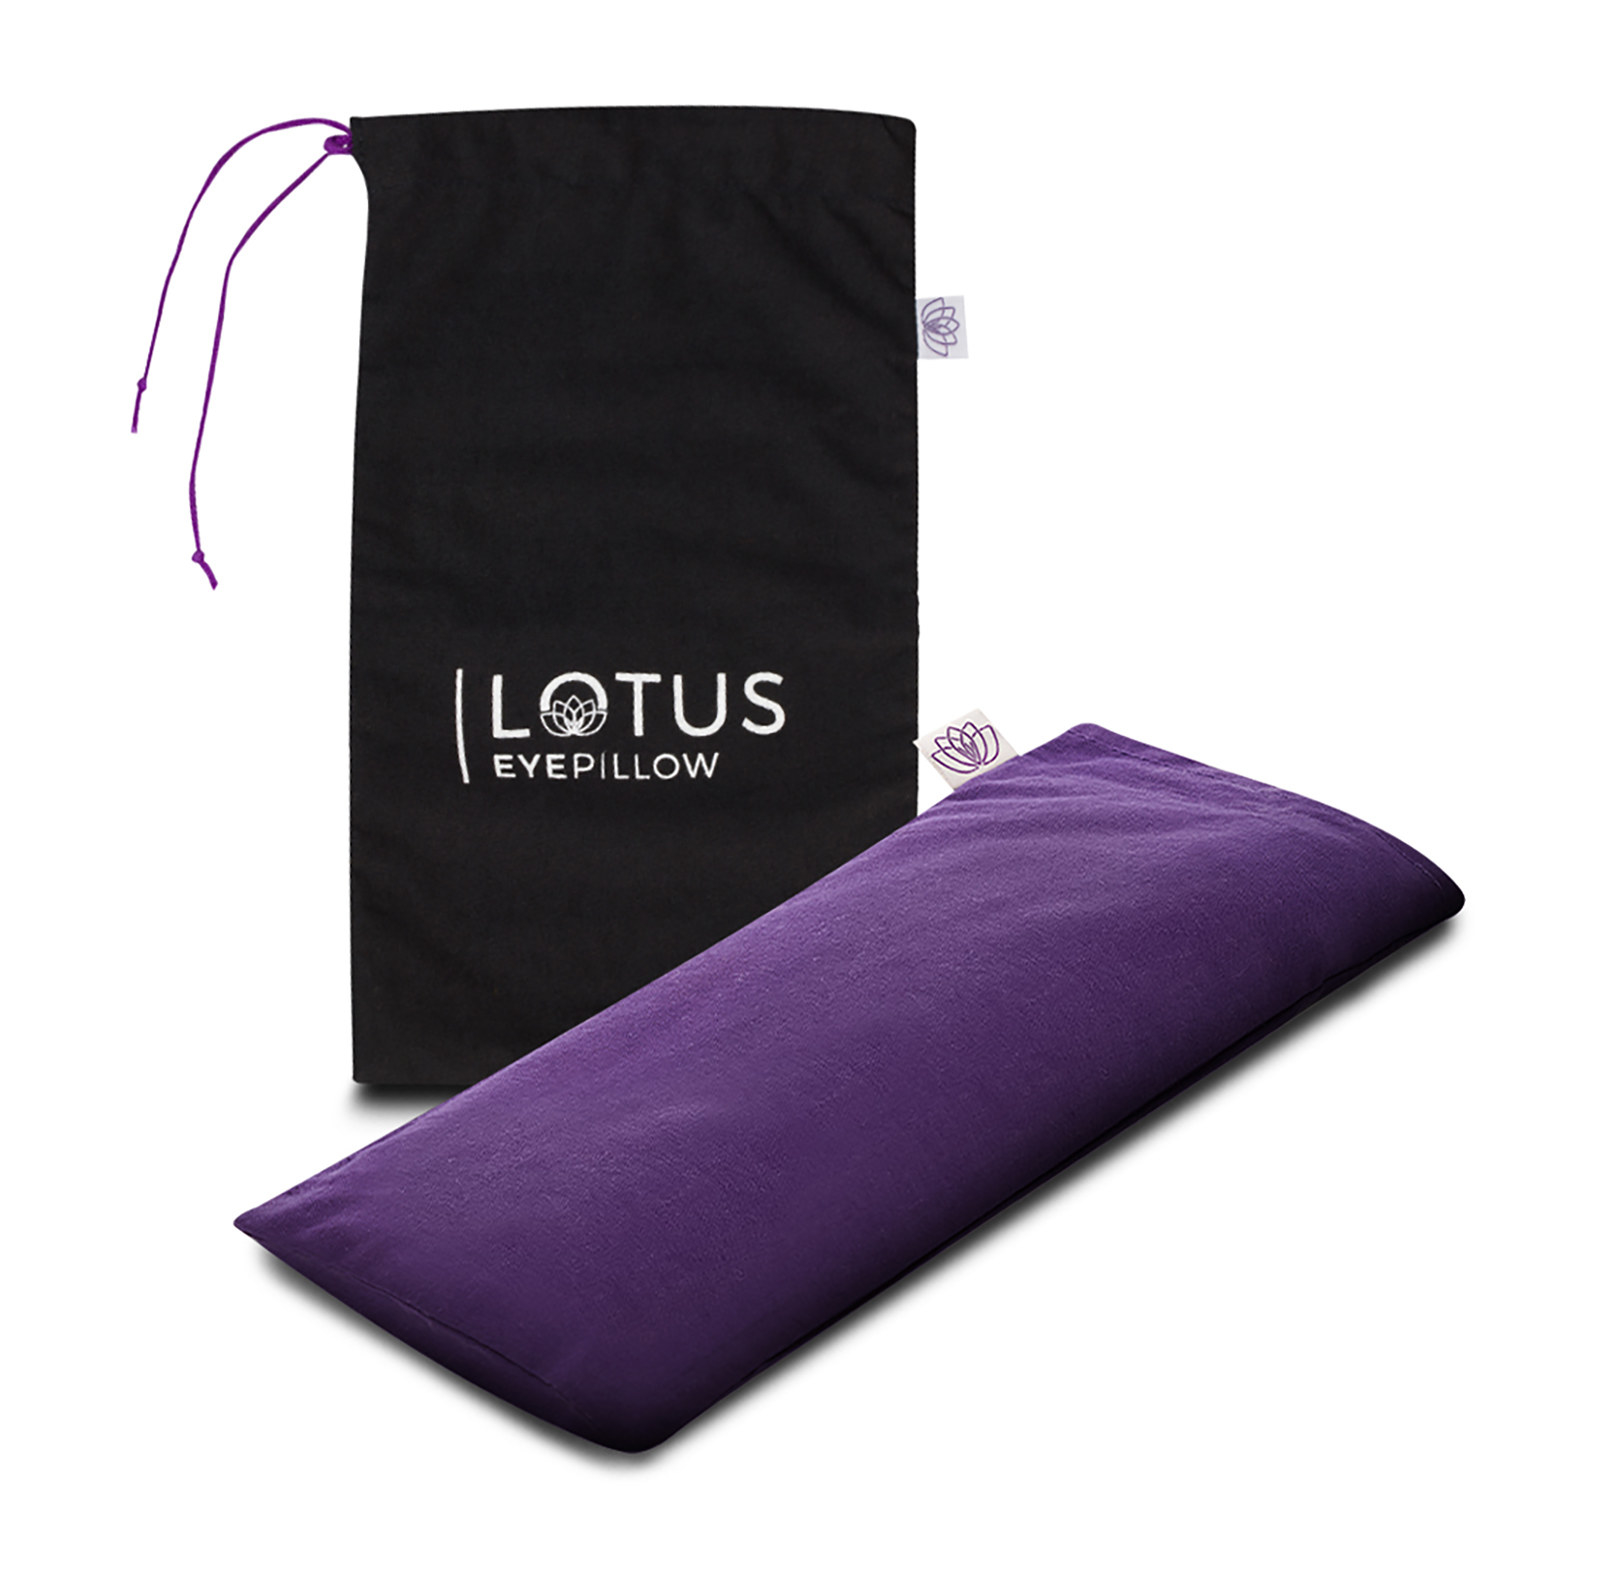 Lotus Weighted Lavender Eye Pillow.